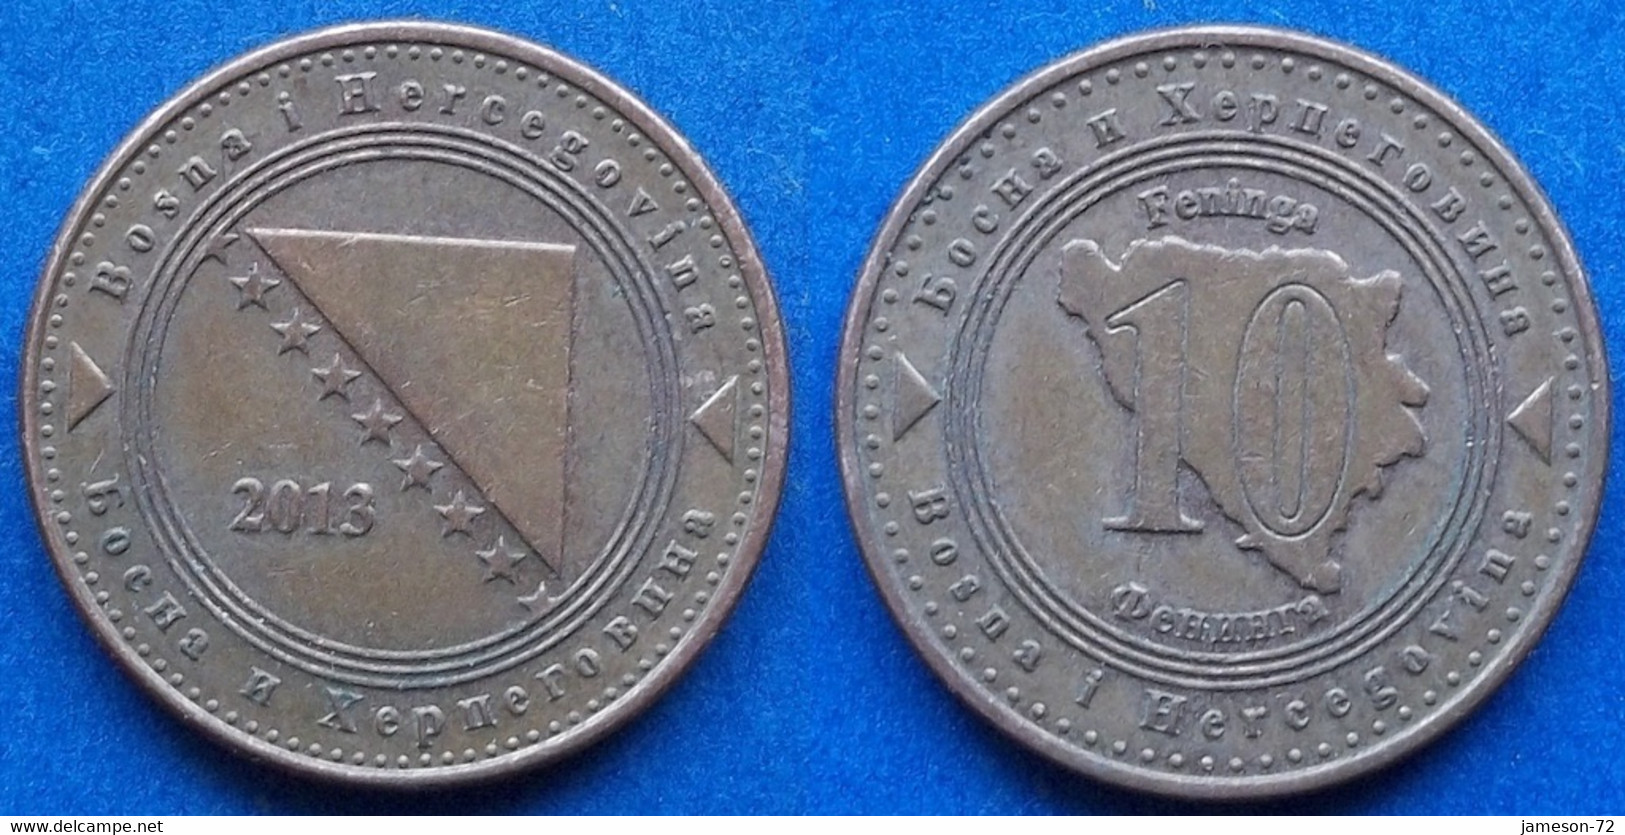 BOSNIA-HERZEGOVINA - 10 Feninga 2013 KM# 115 Federal Republic - Edelweiss Coins - Bosnia And Herzegovina